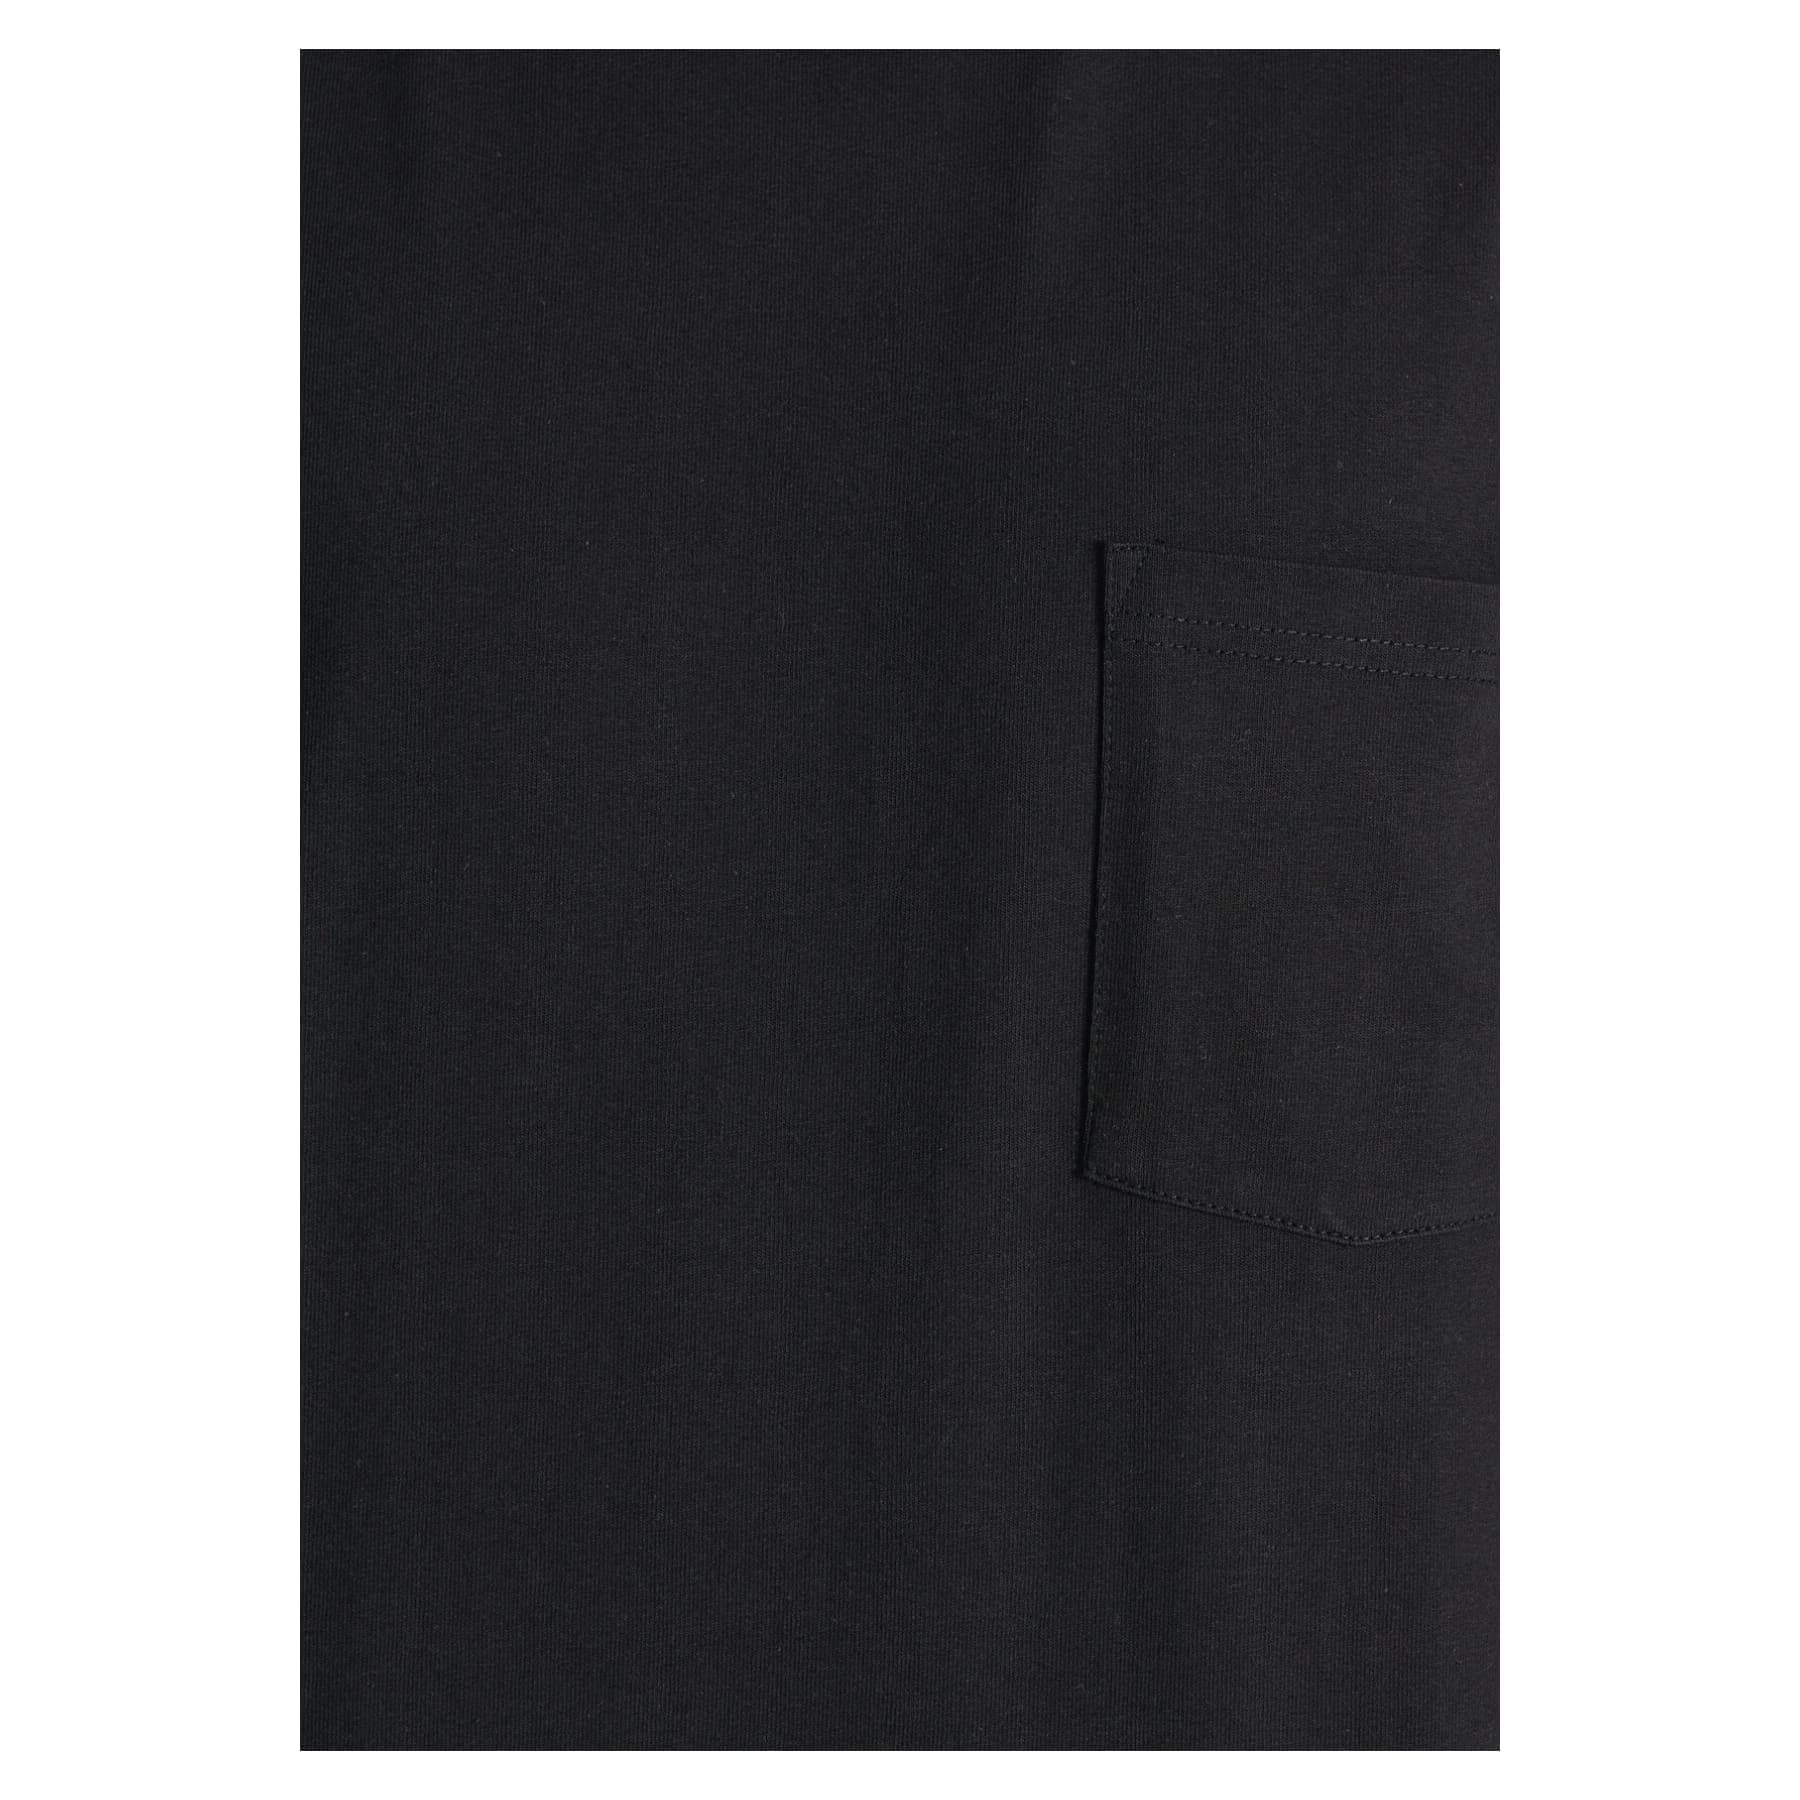 Mavi Jeans Cepli Siyah Basic Tişört (066248-900)